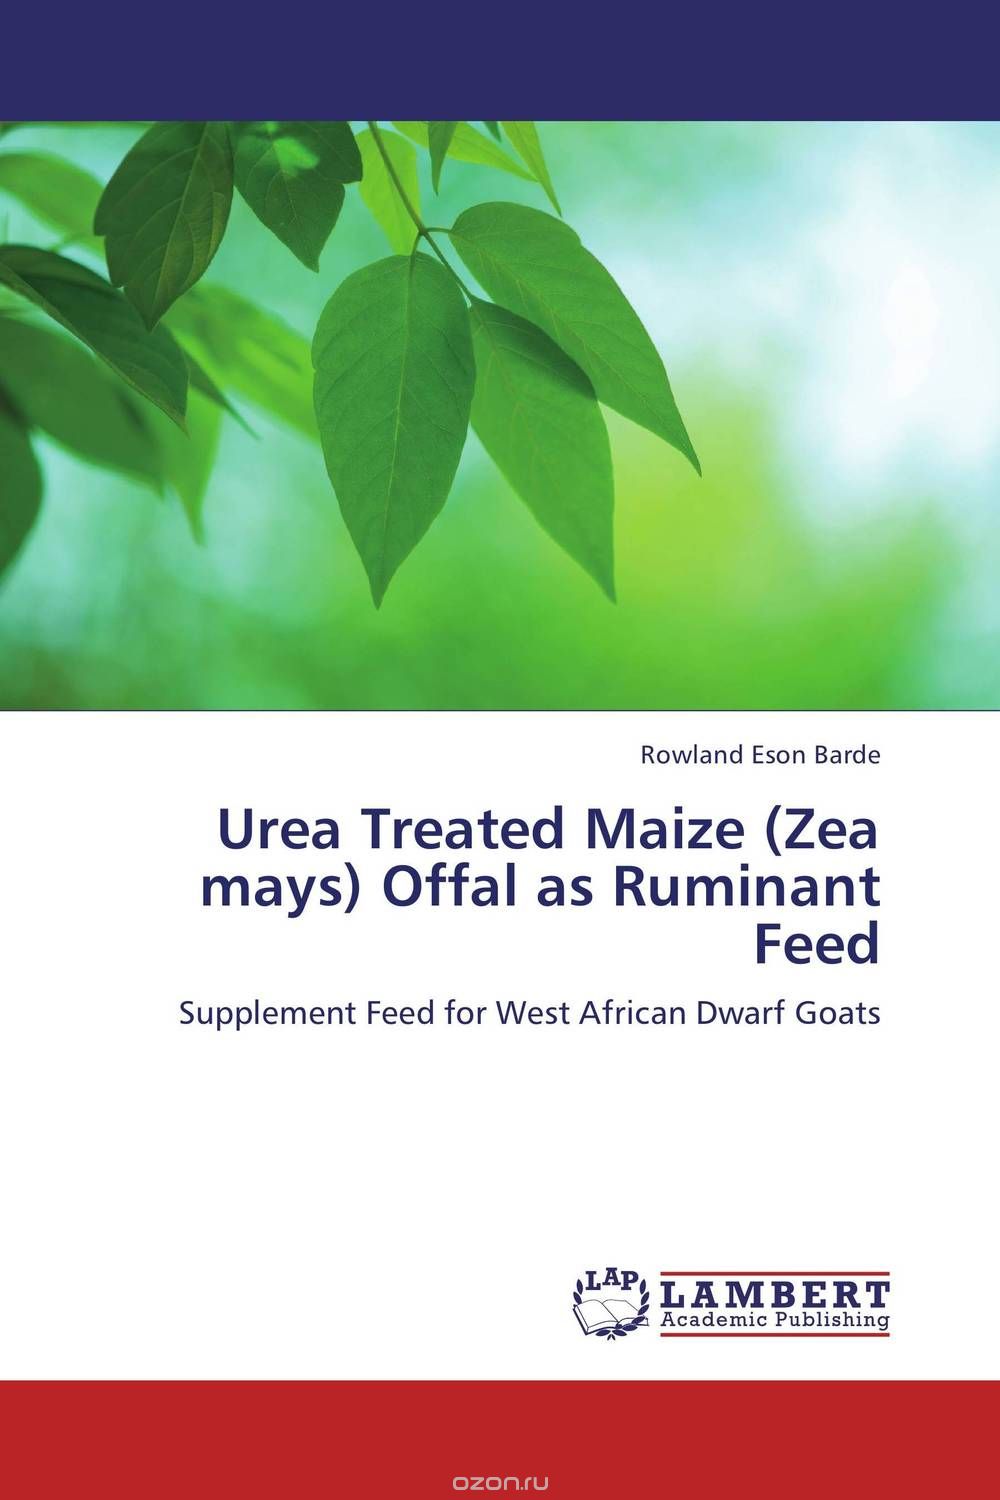 Скачать книгу "Urea Treated Maize (Zea mays) Offal as Ruminant Feed"